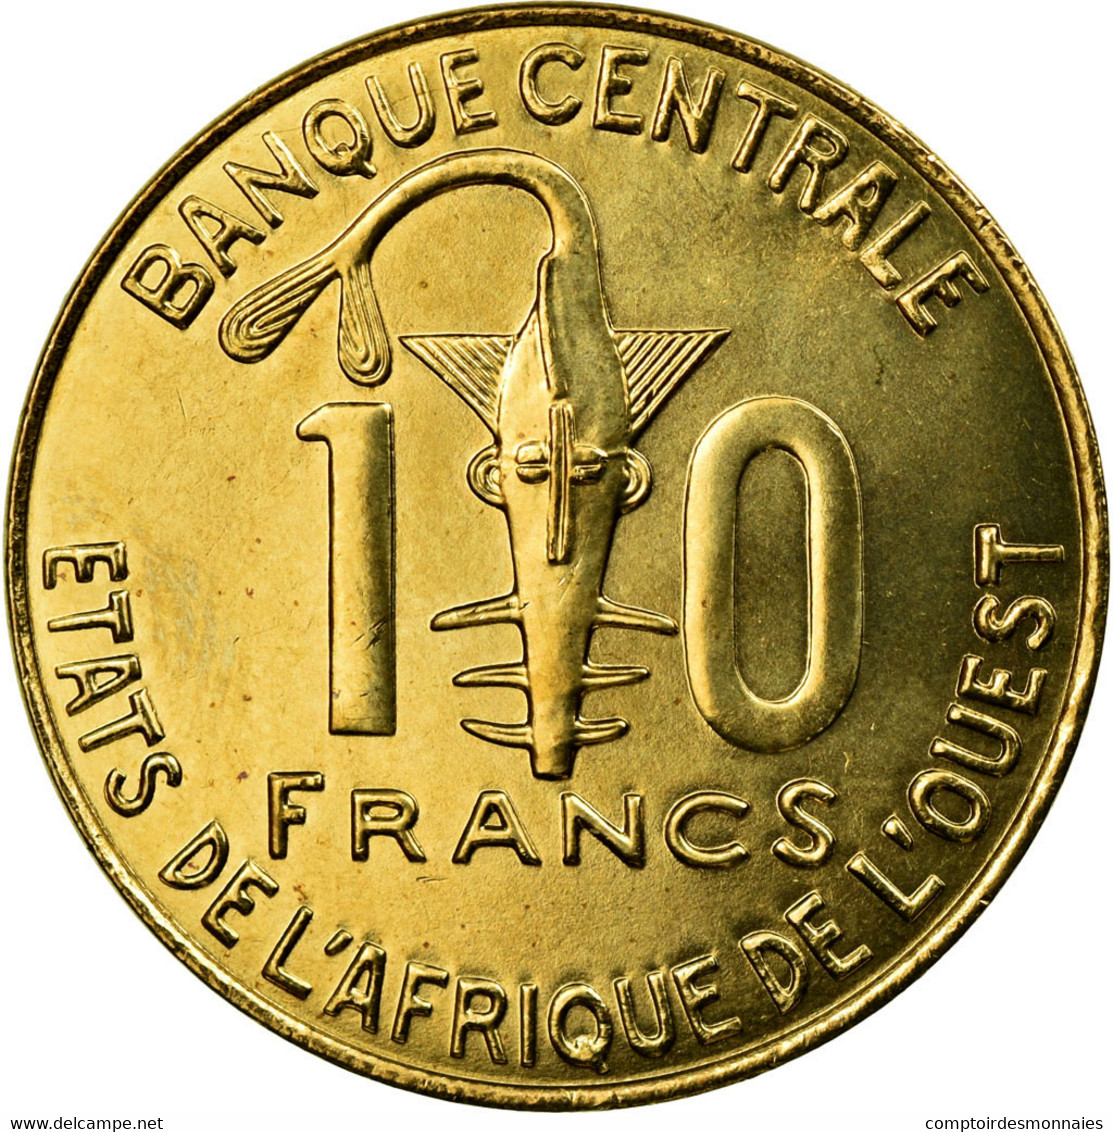 Monnaie, West African States, 10 Francs, 2005, SUP, Aluminum-Bronze, KM:10 - Ivory Coast